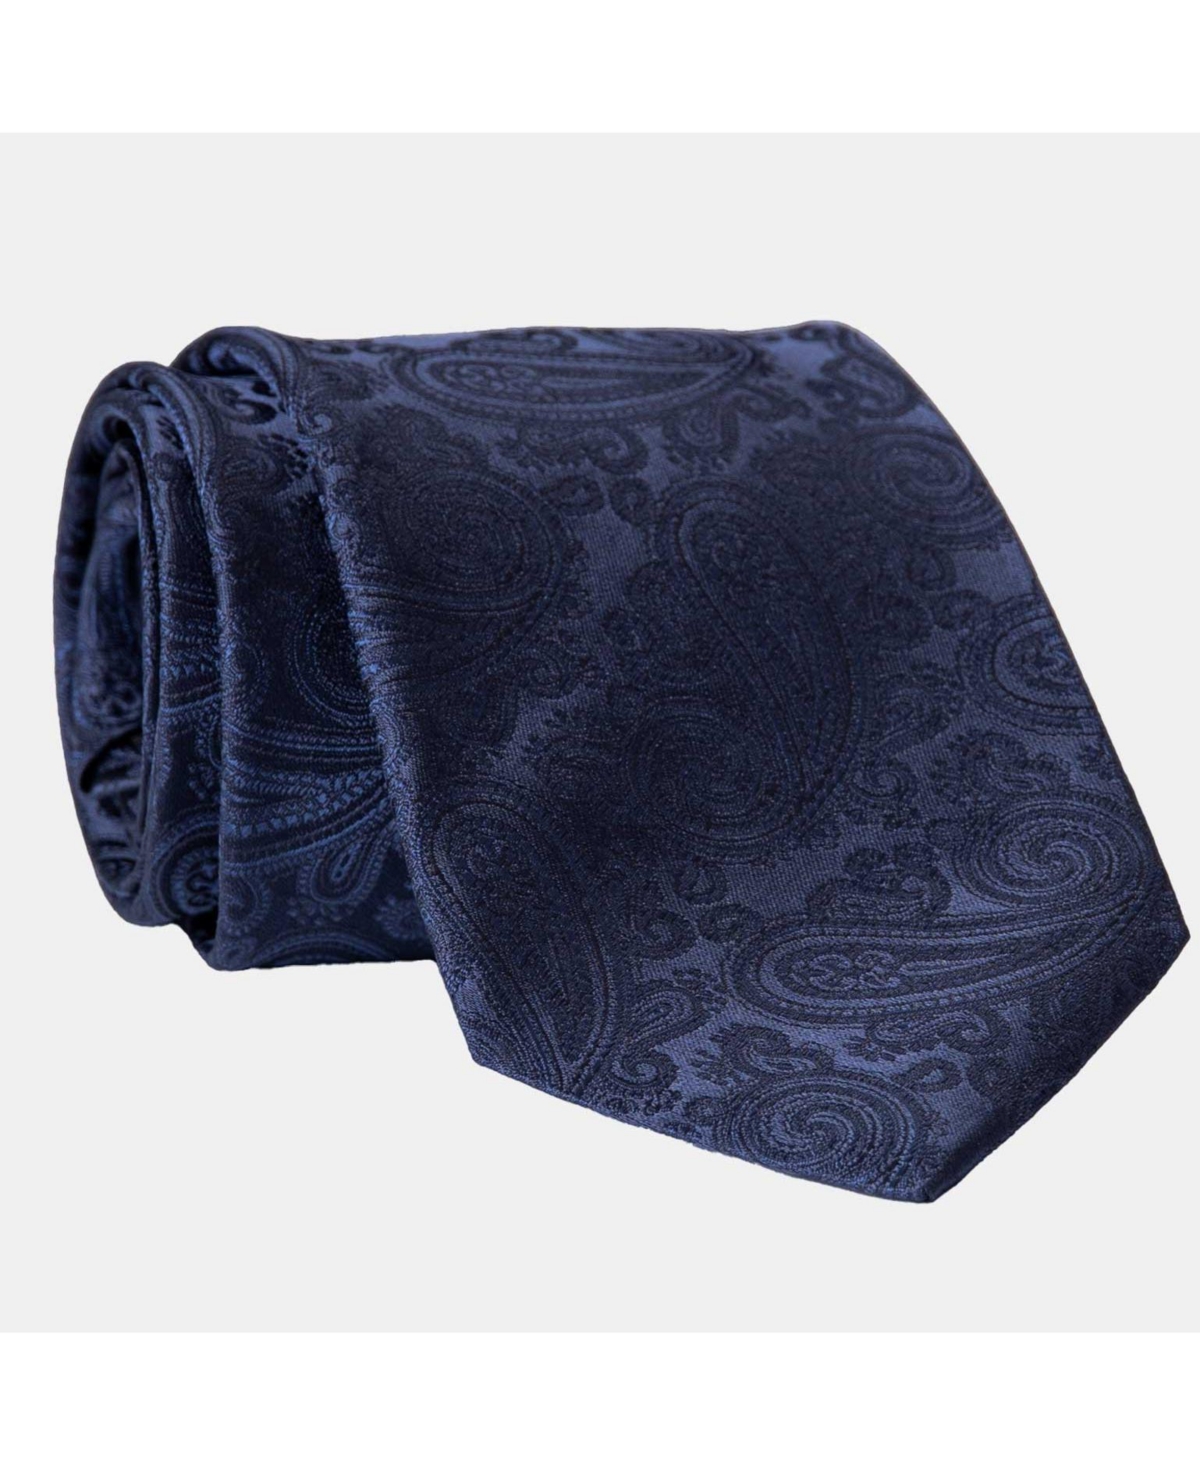 Soave - Extra Long Silk Jacquard Tie for Men - Midnight blue